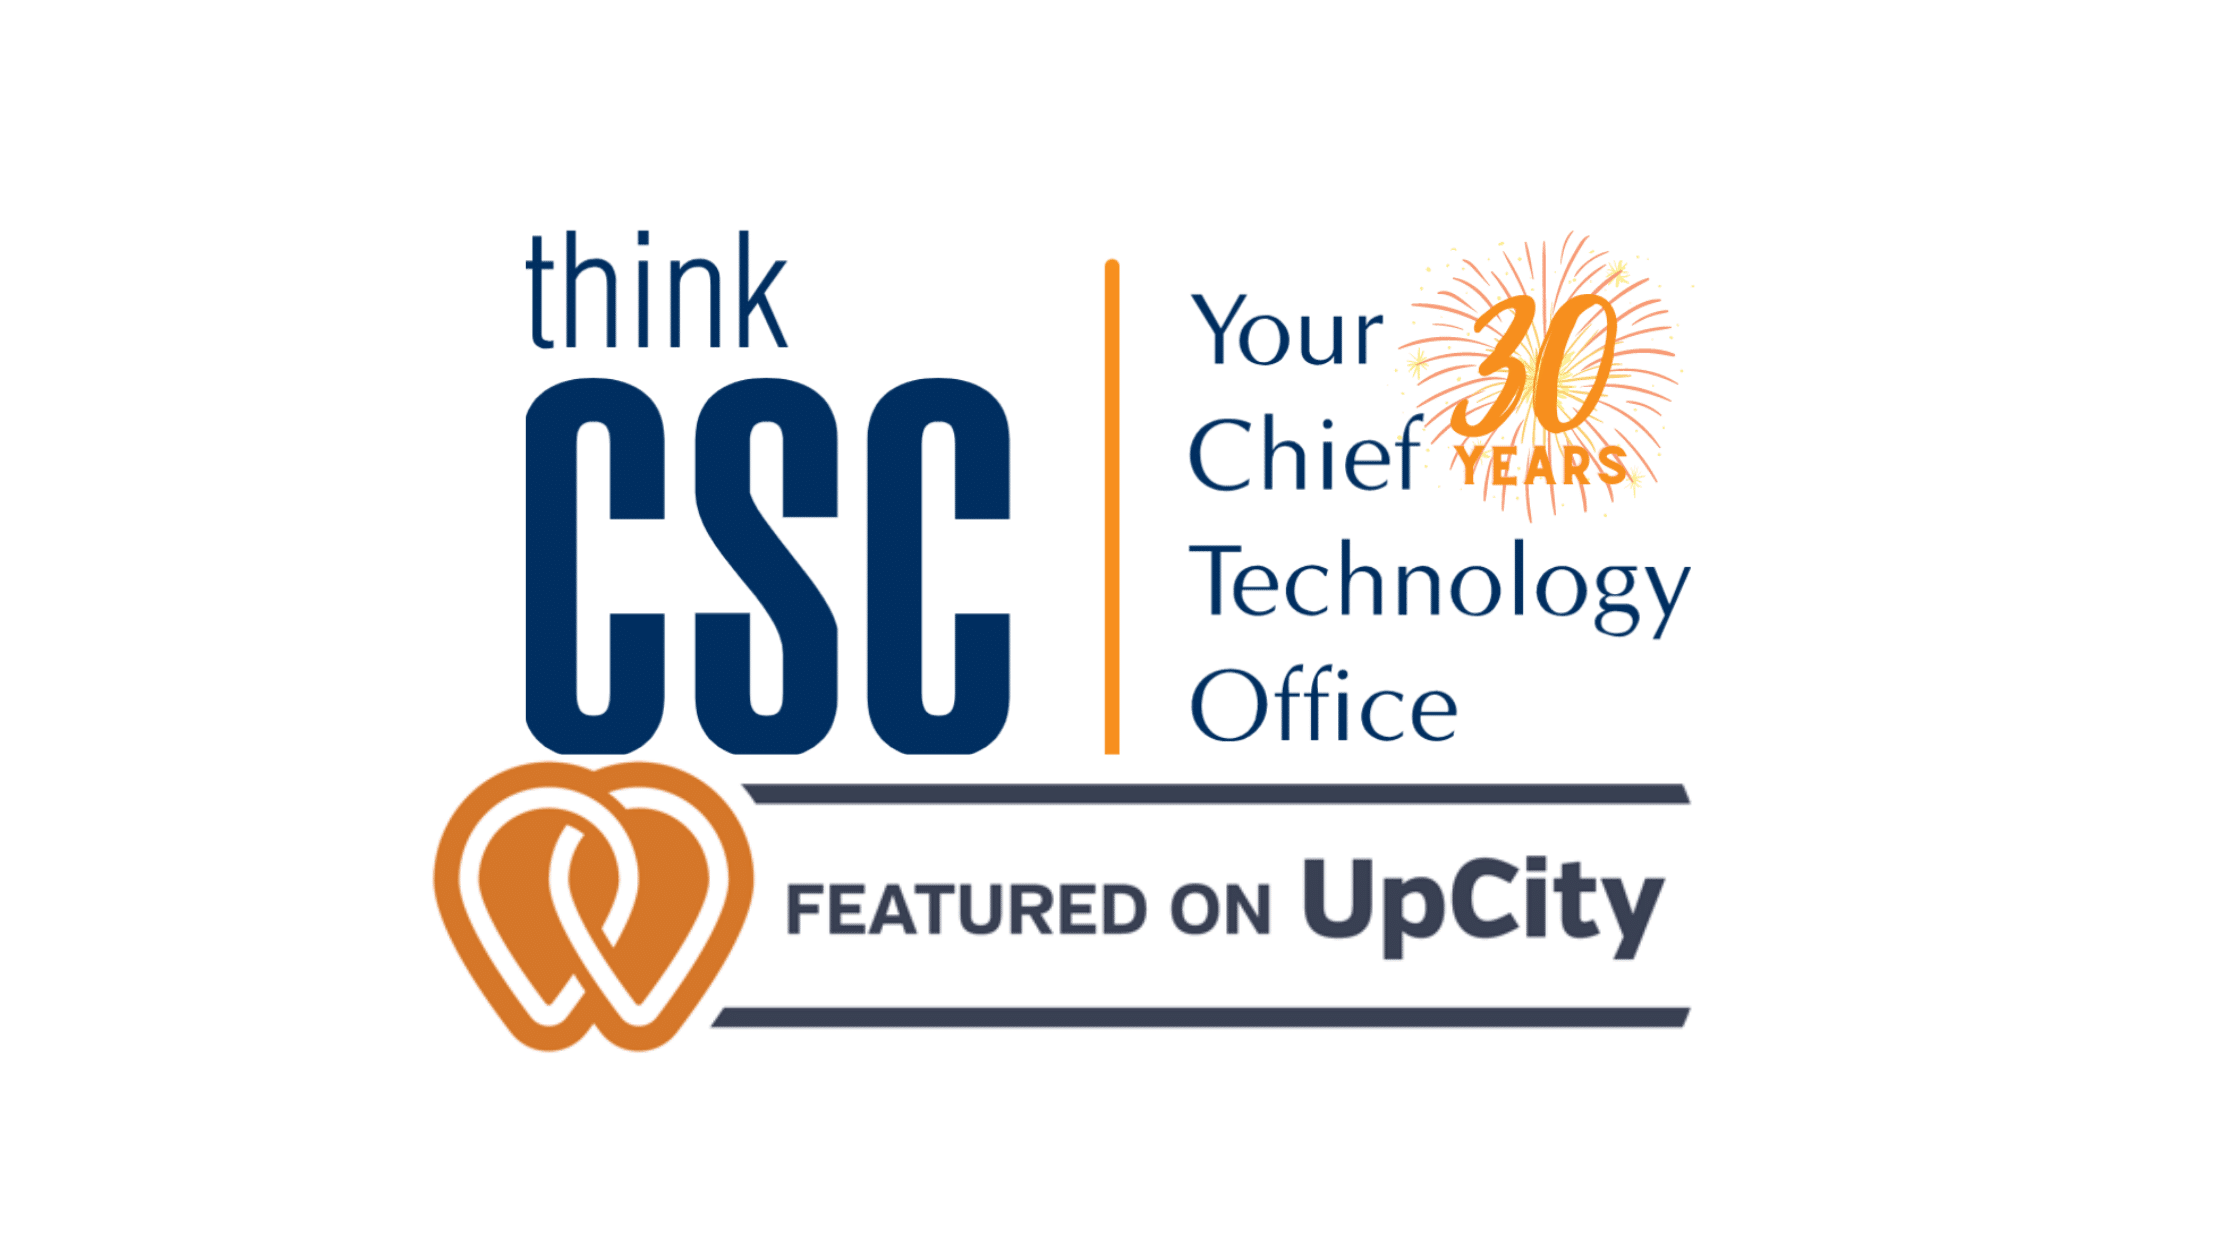 thinkCSC Named Top B2B Service Provider on UpCity